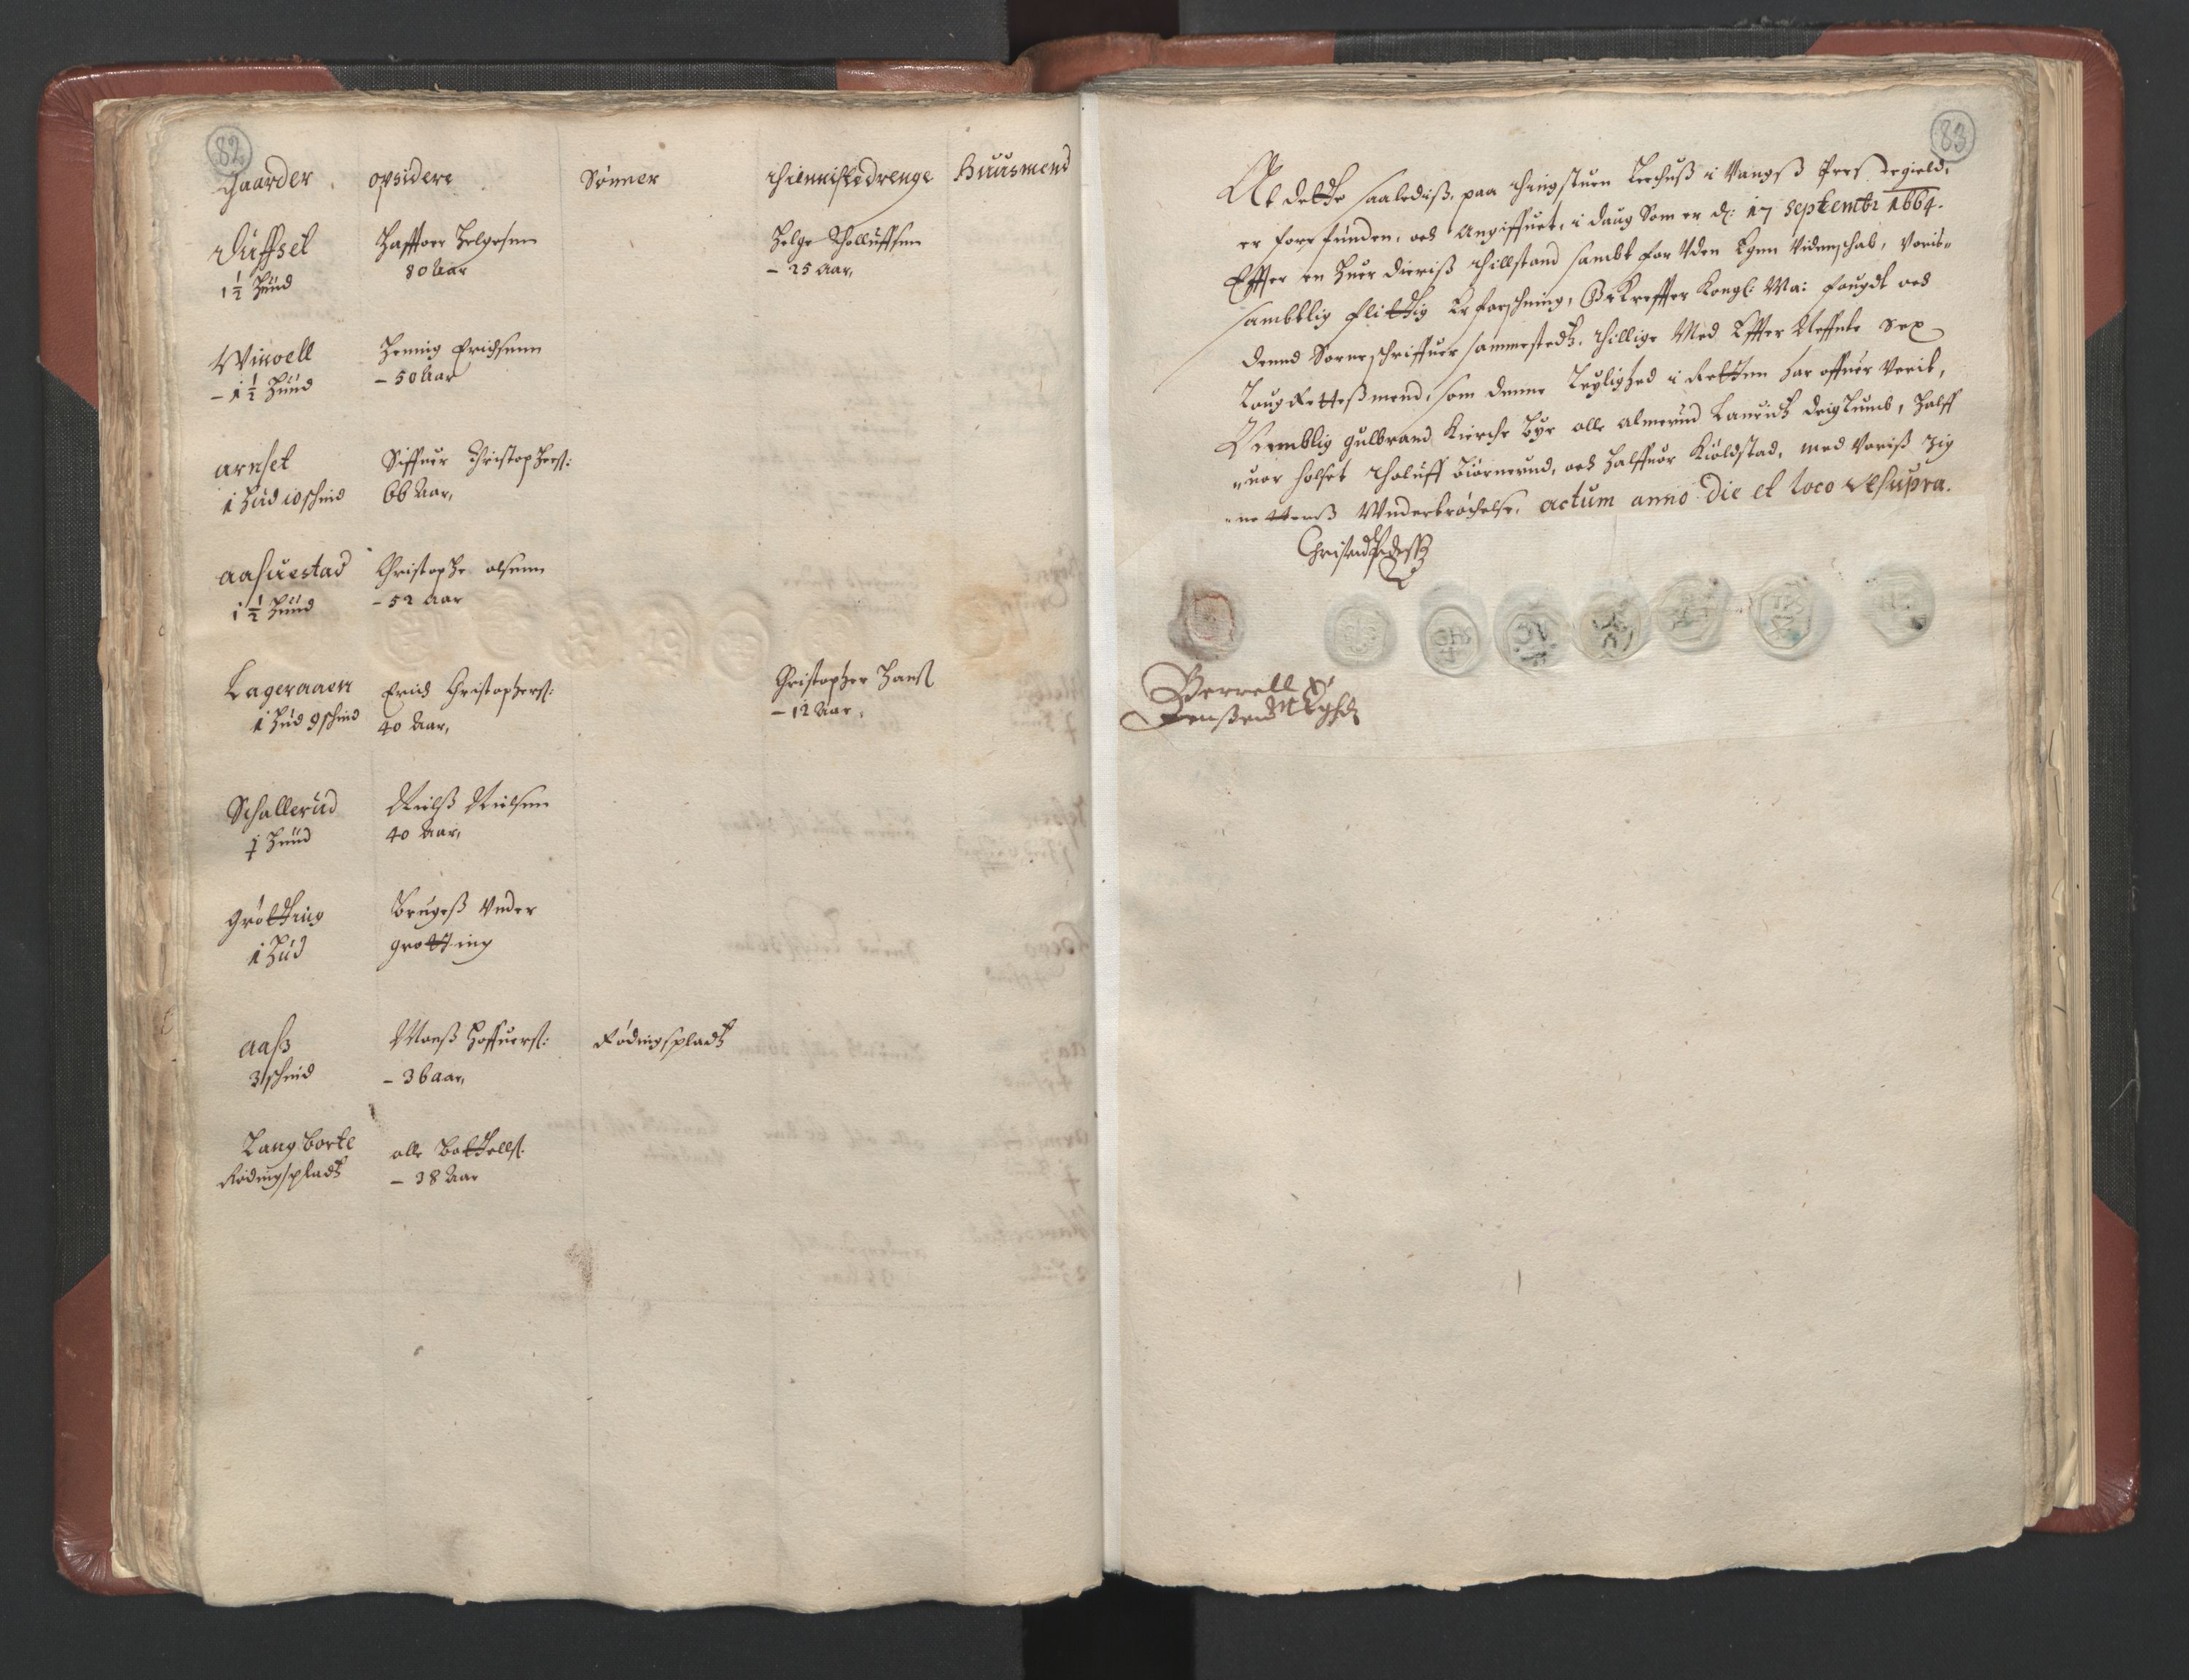 RA, Fogdenes og sorenskrivernes manntall 1664-1666, nr. 3: Hedmark fogderi og Solør, Østerdal og Odal fogderi, 1664, s. 82-83